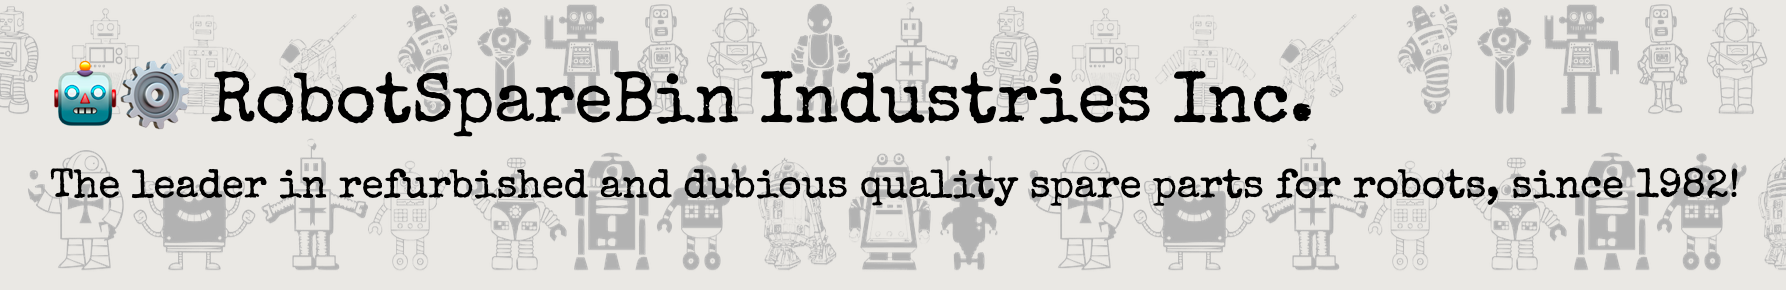 RobotSpareBin Industries Inc.